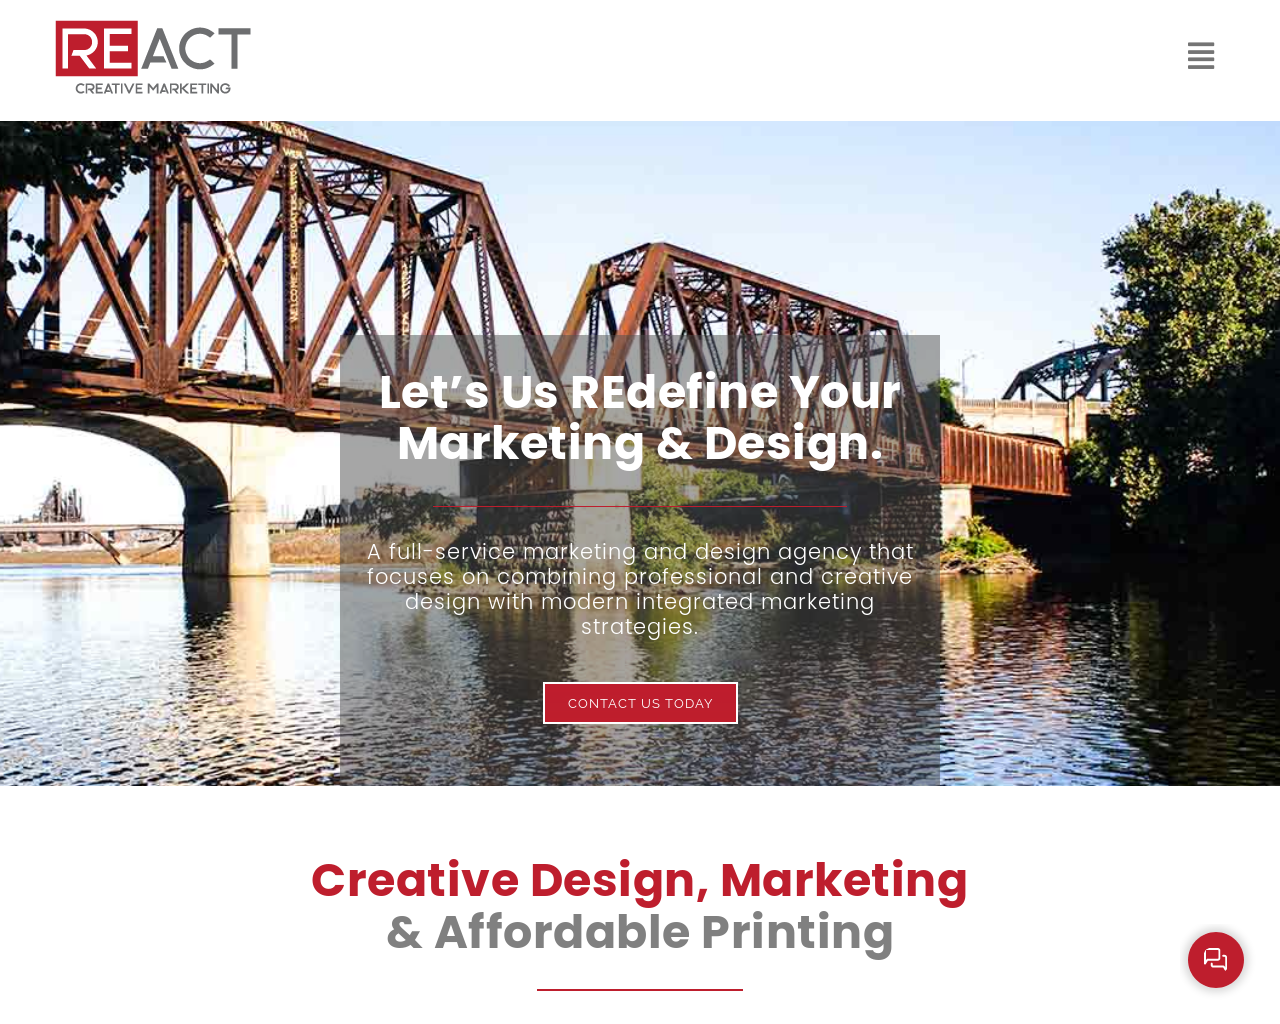 REACT Creative Marketing (Formerly MAS Graphic Arts)